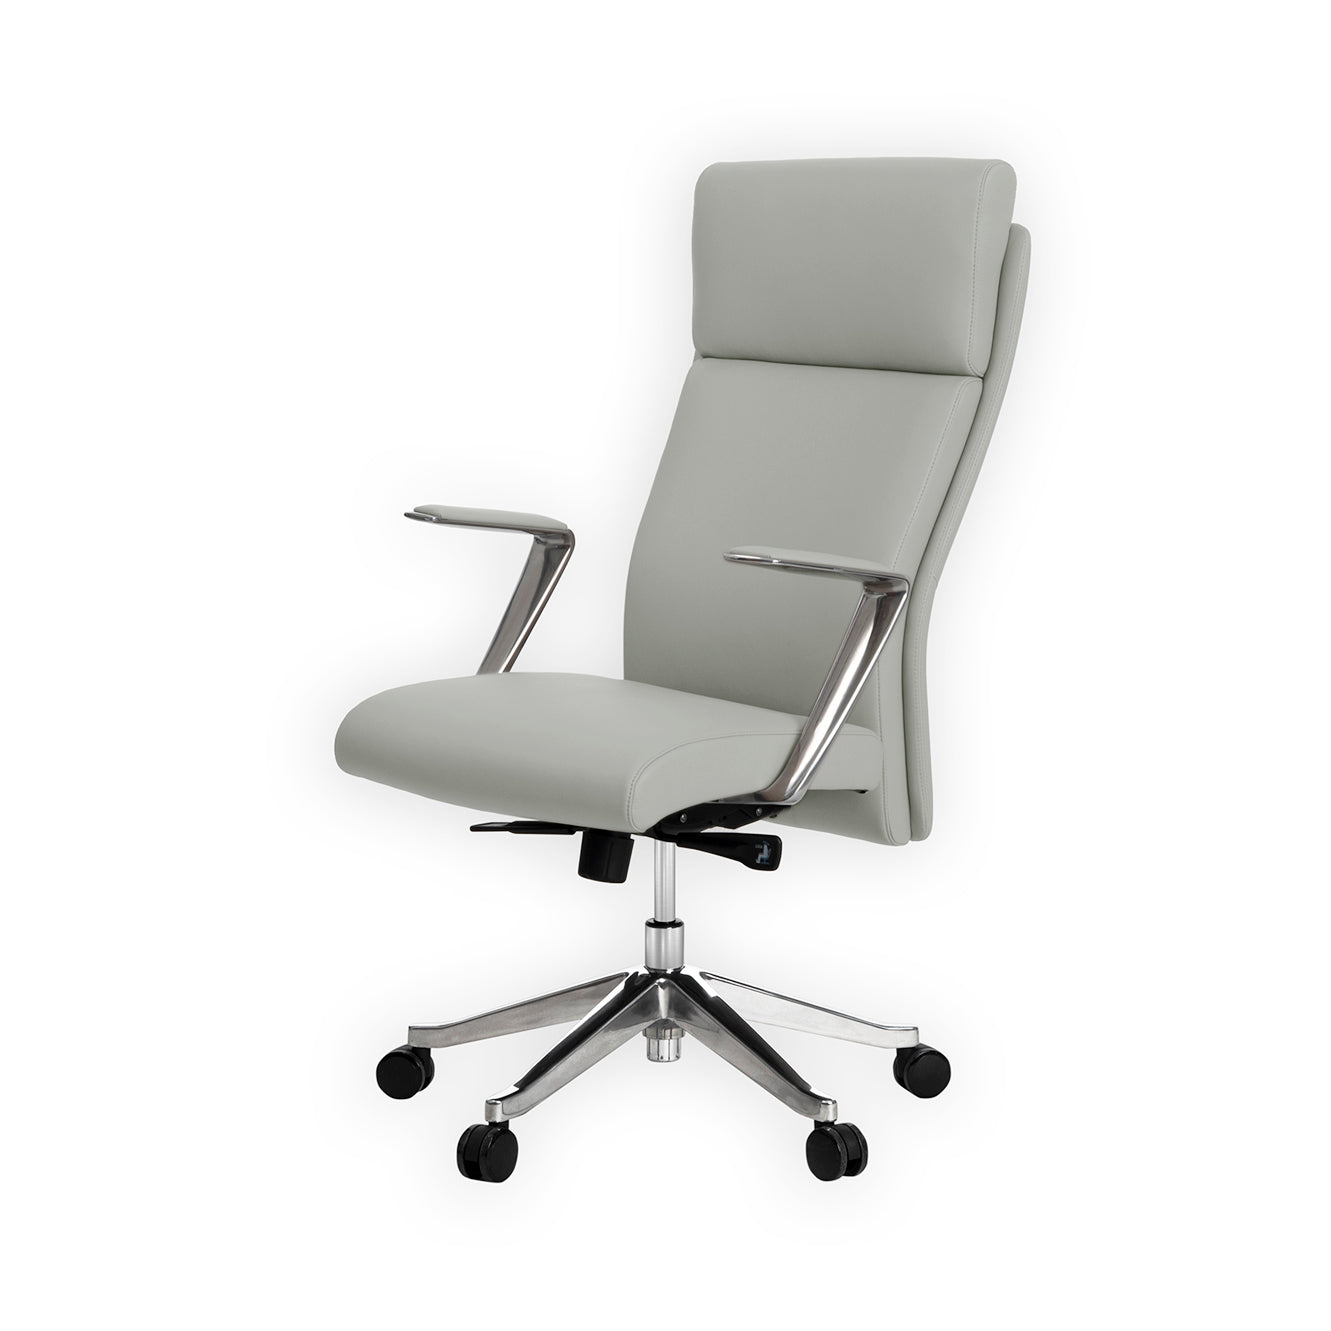 UJI Customer Chair - Light Grey